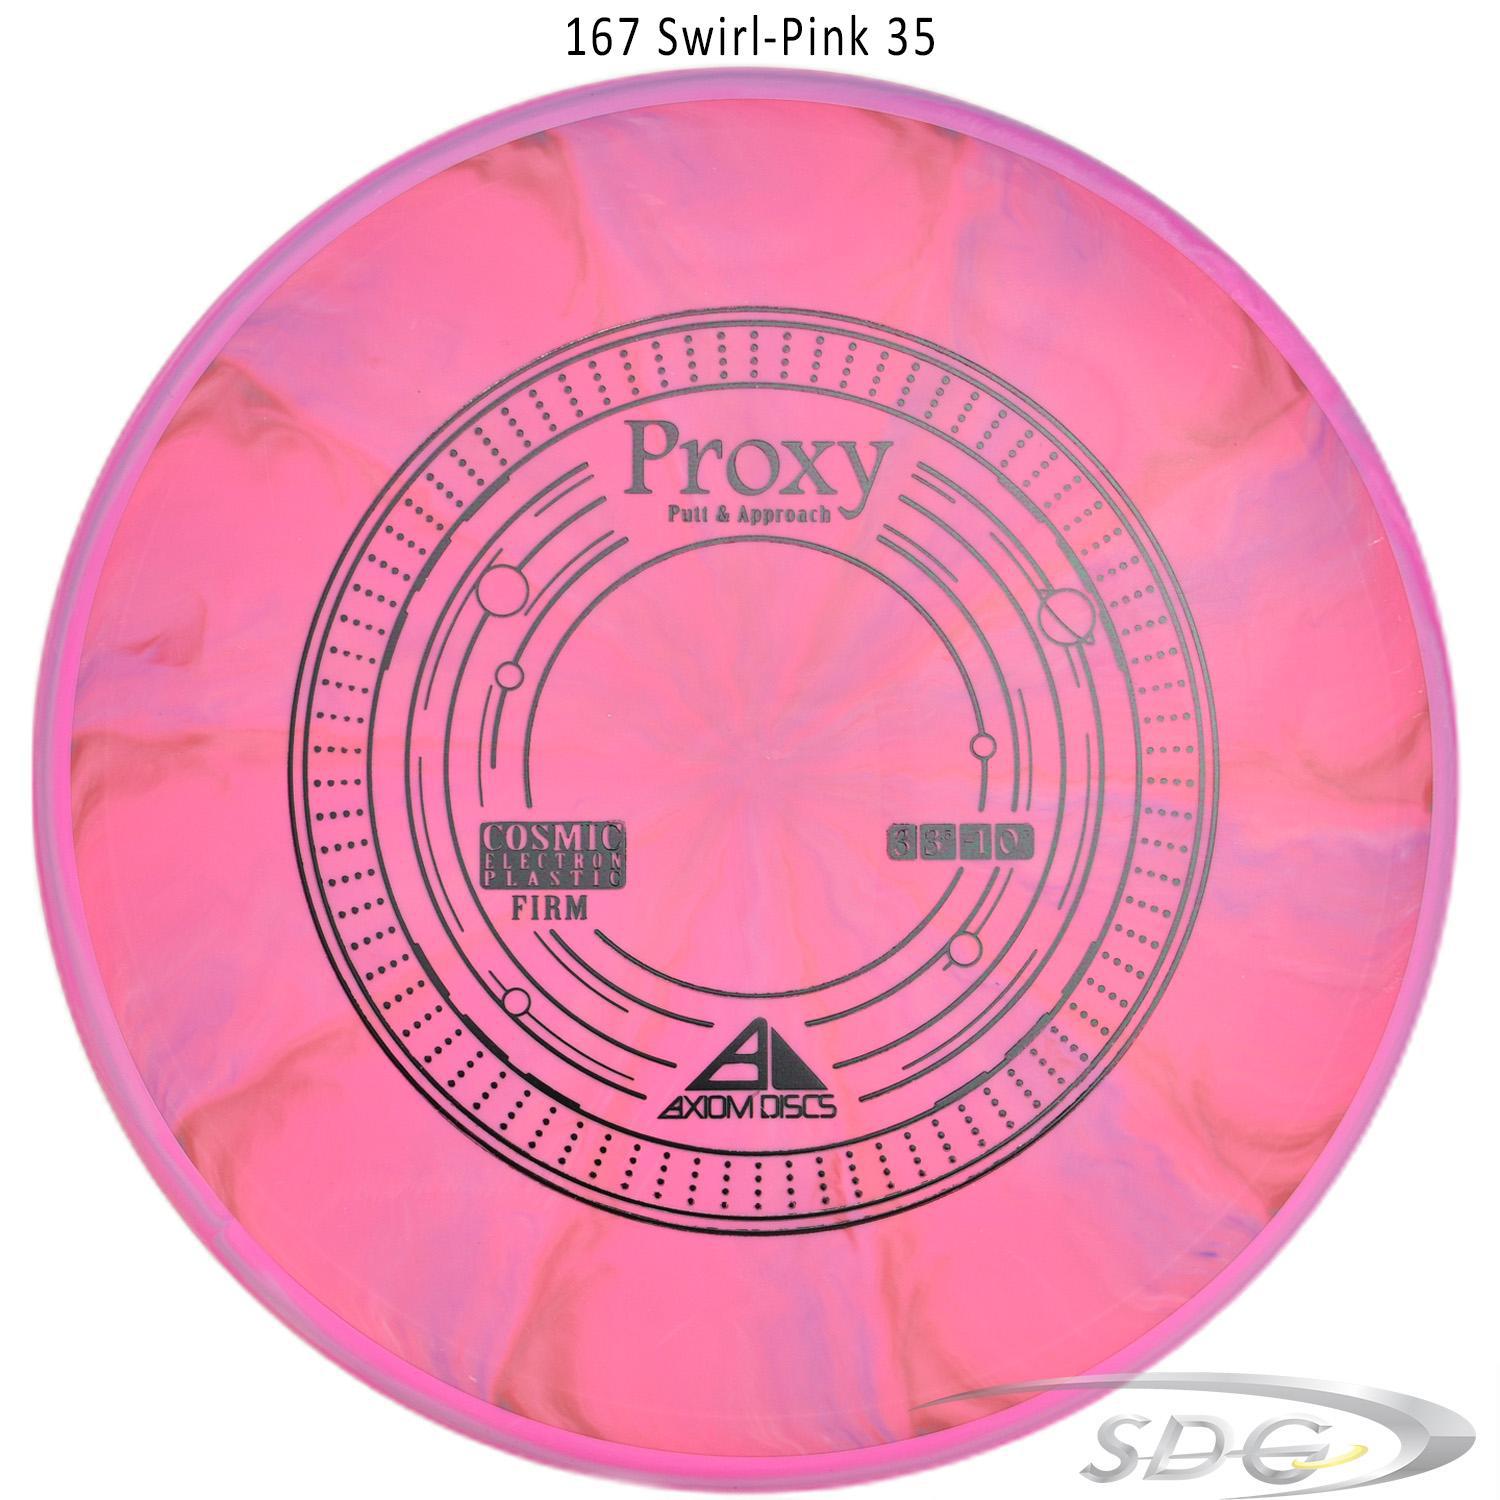 axiom-cosmic-electron-proxy-firm-disc-golf-putt-approach 167 Swirl-Pink 35 